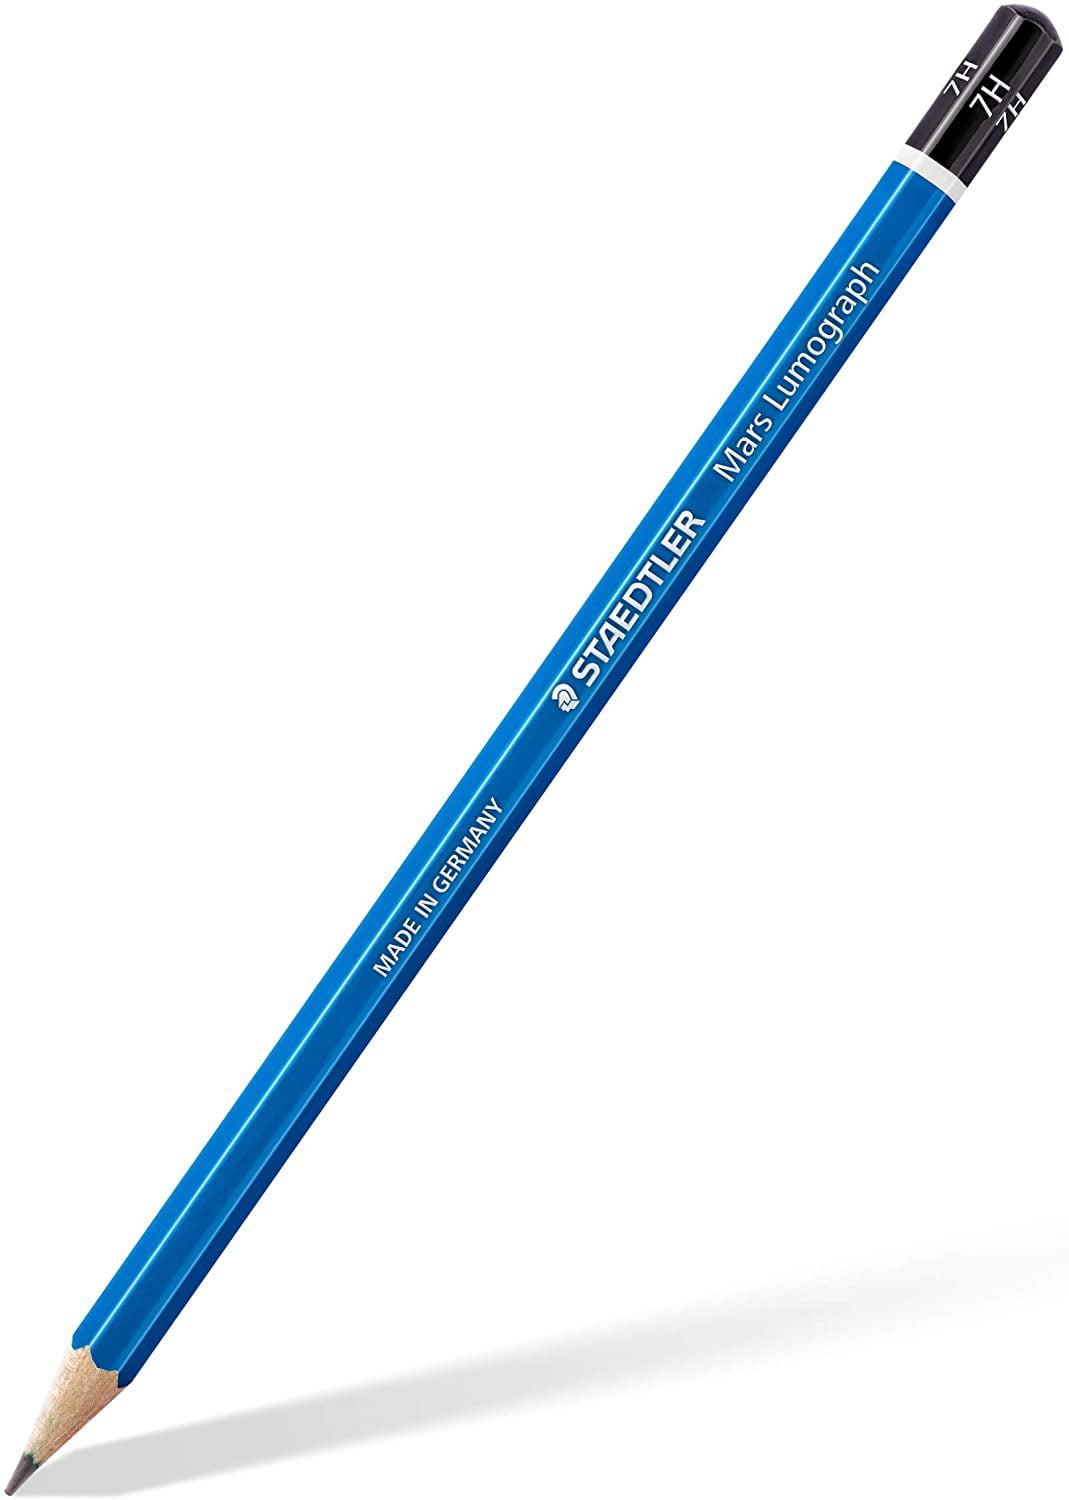 6 Package of Staedtler Mars Lumograph Pencils Made in Germany Royal Blue